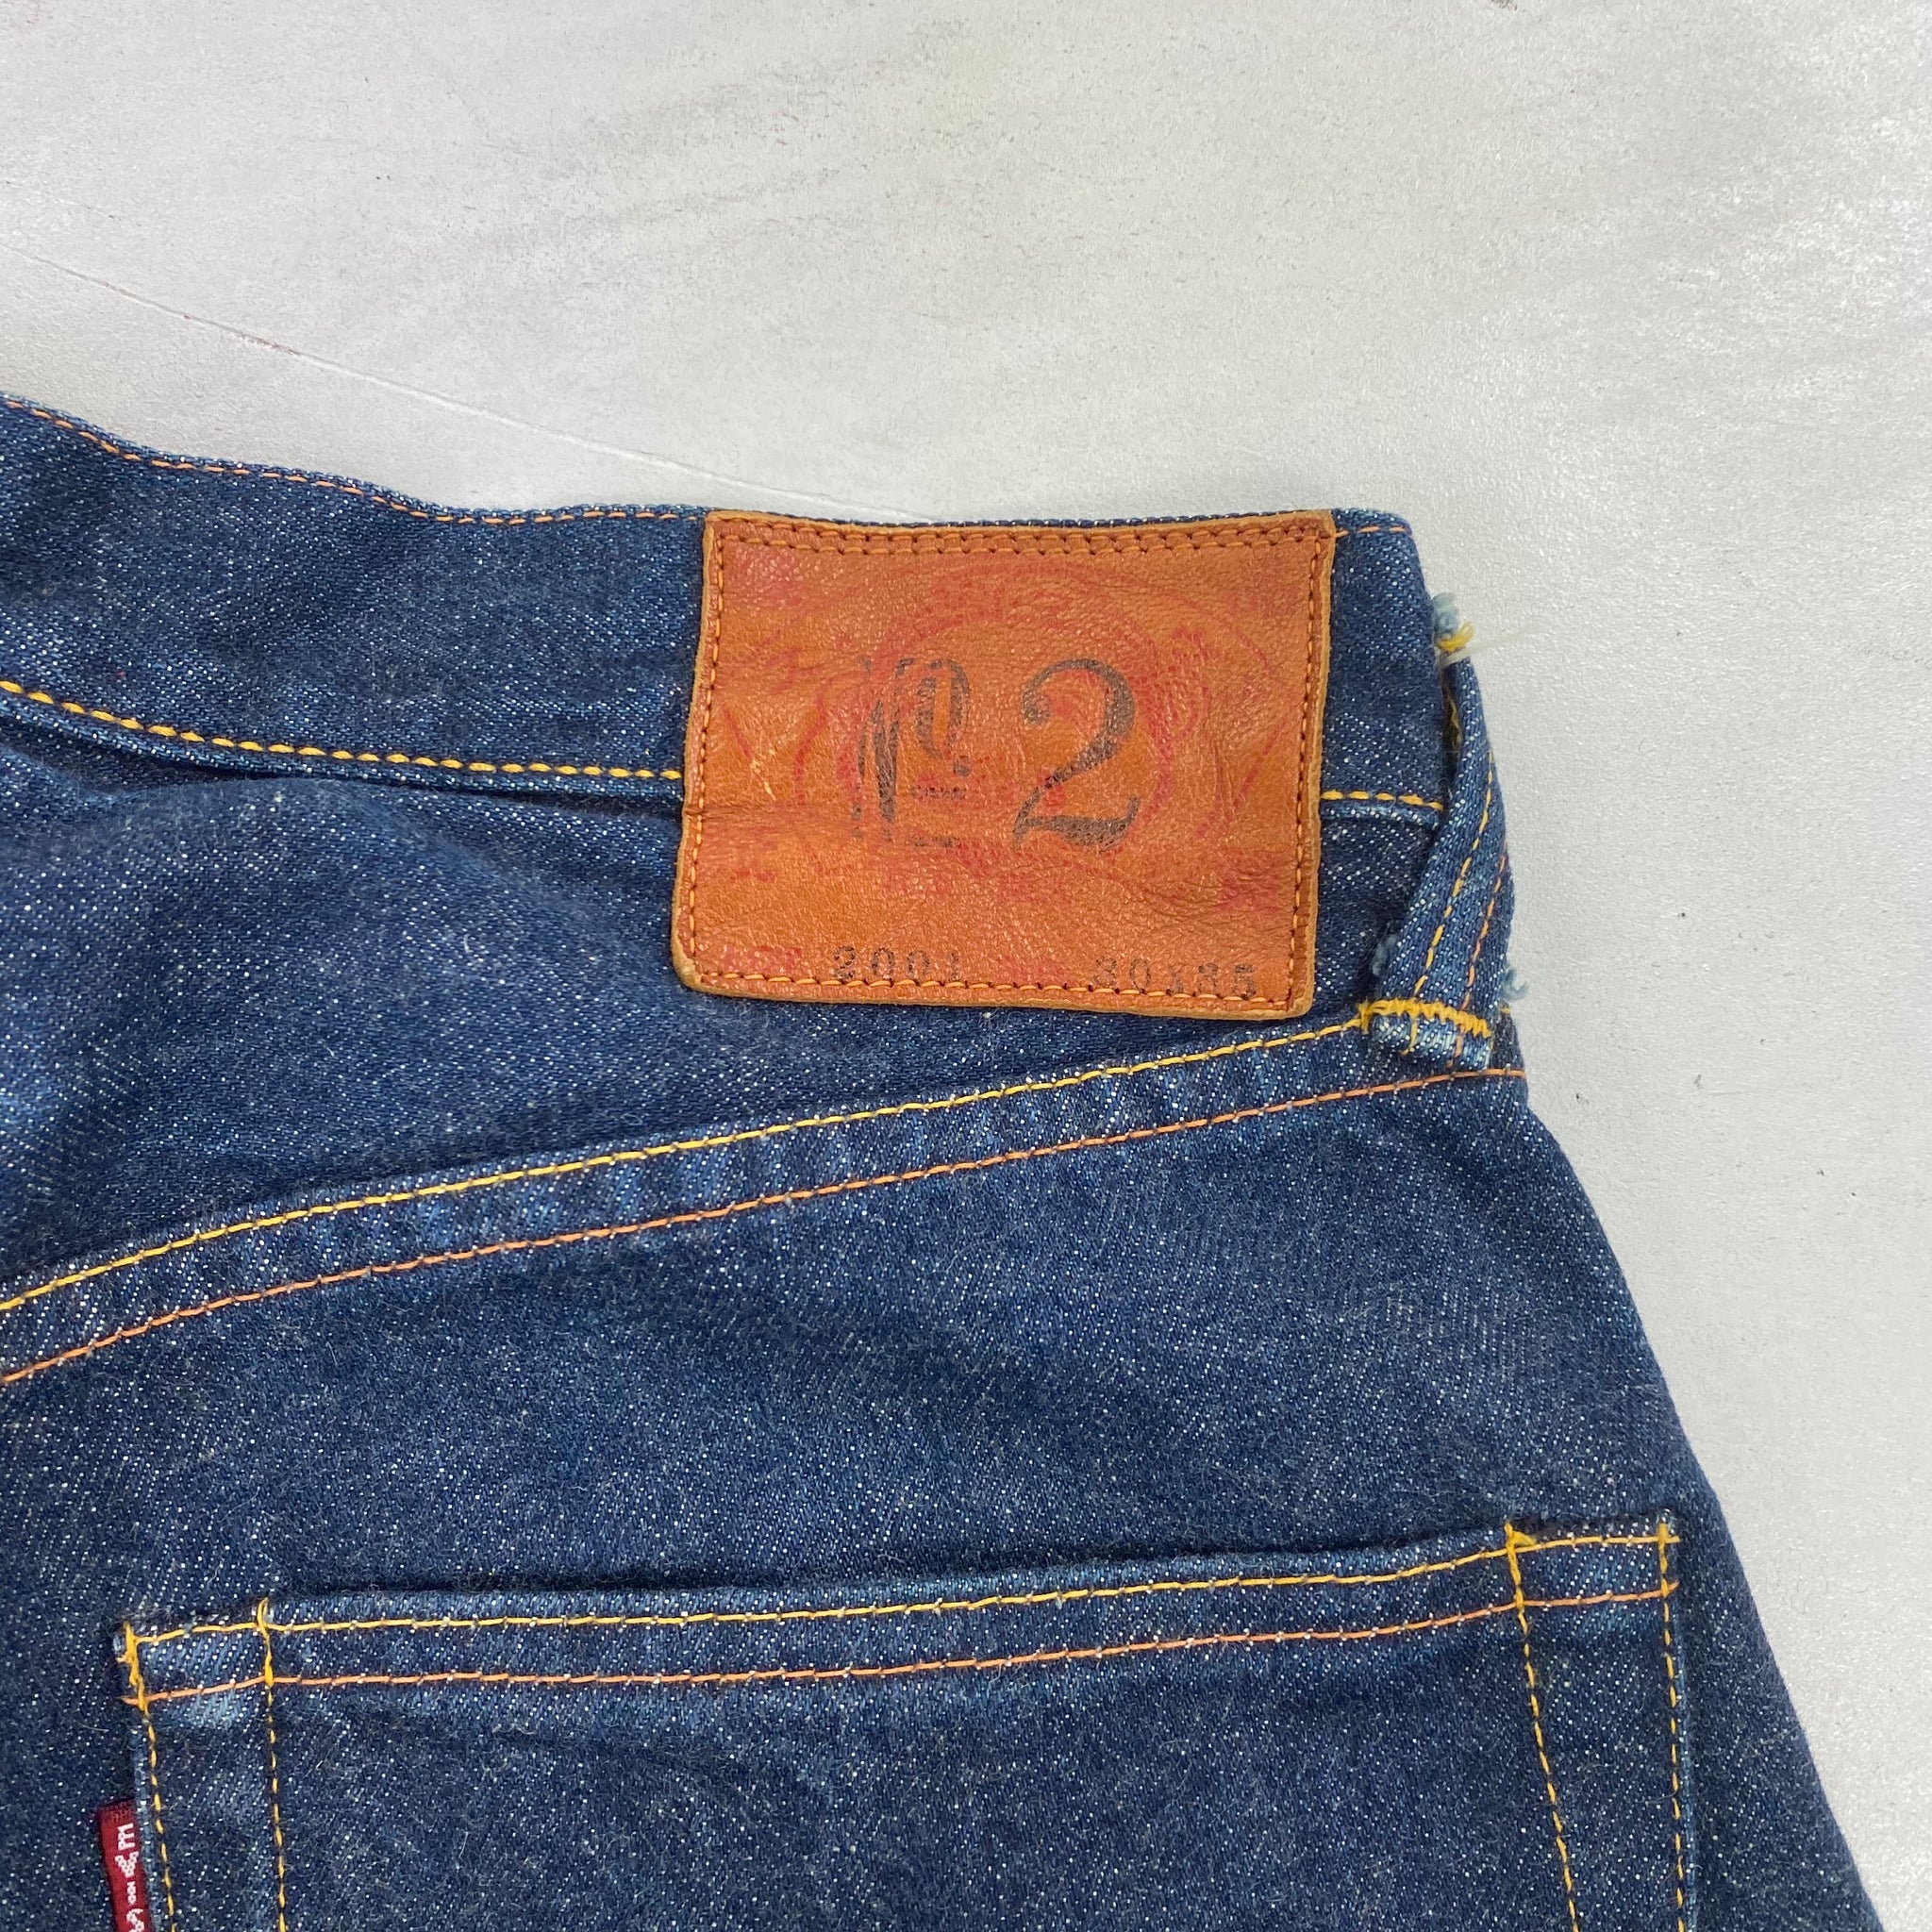 Evisu Daicock Jeans (W30 L34)